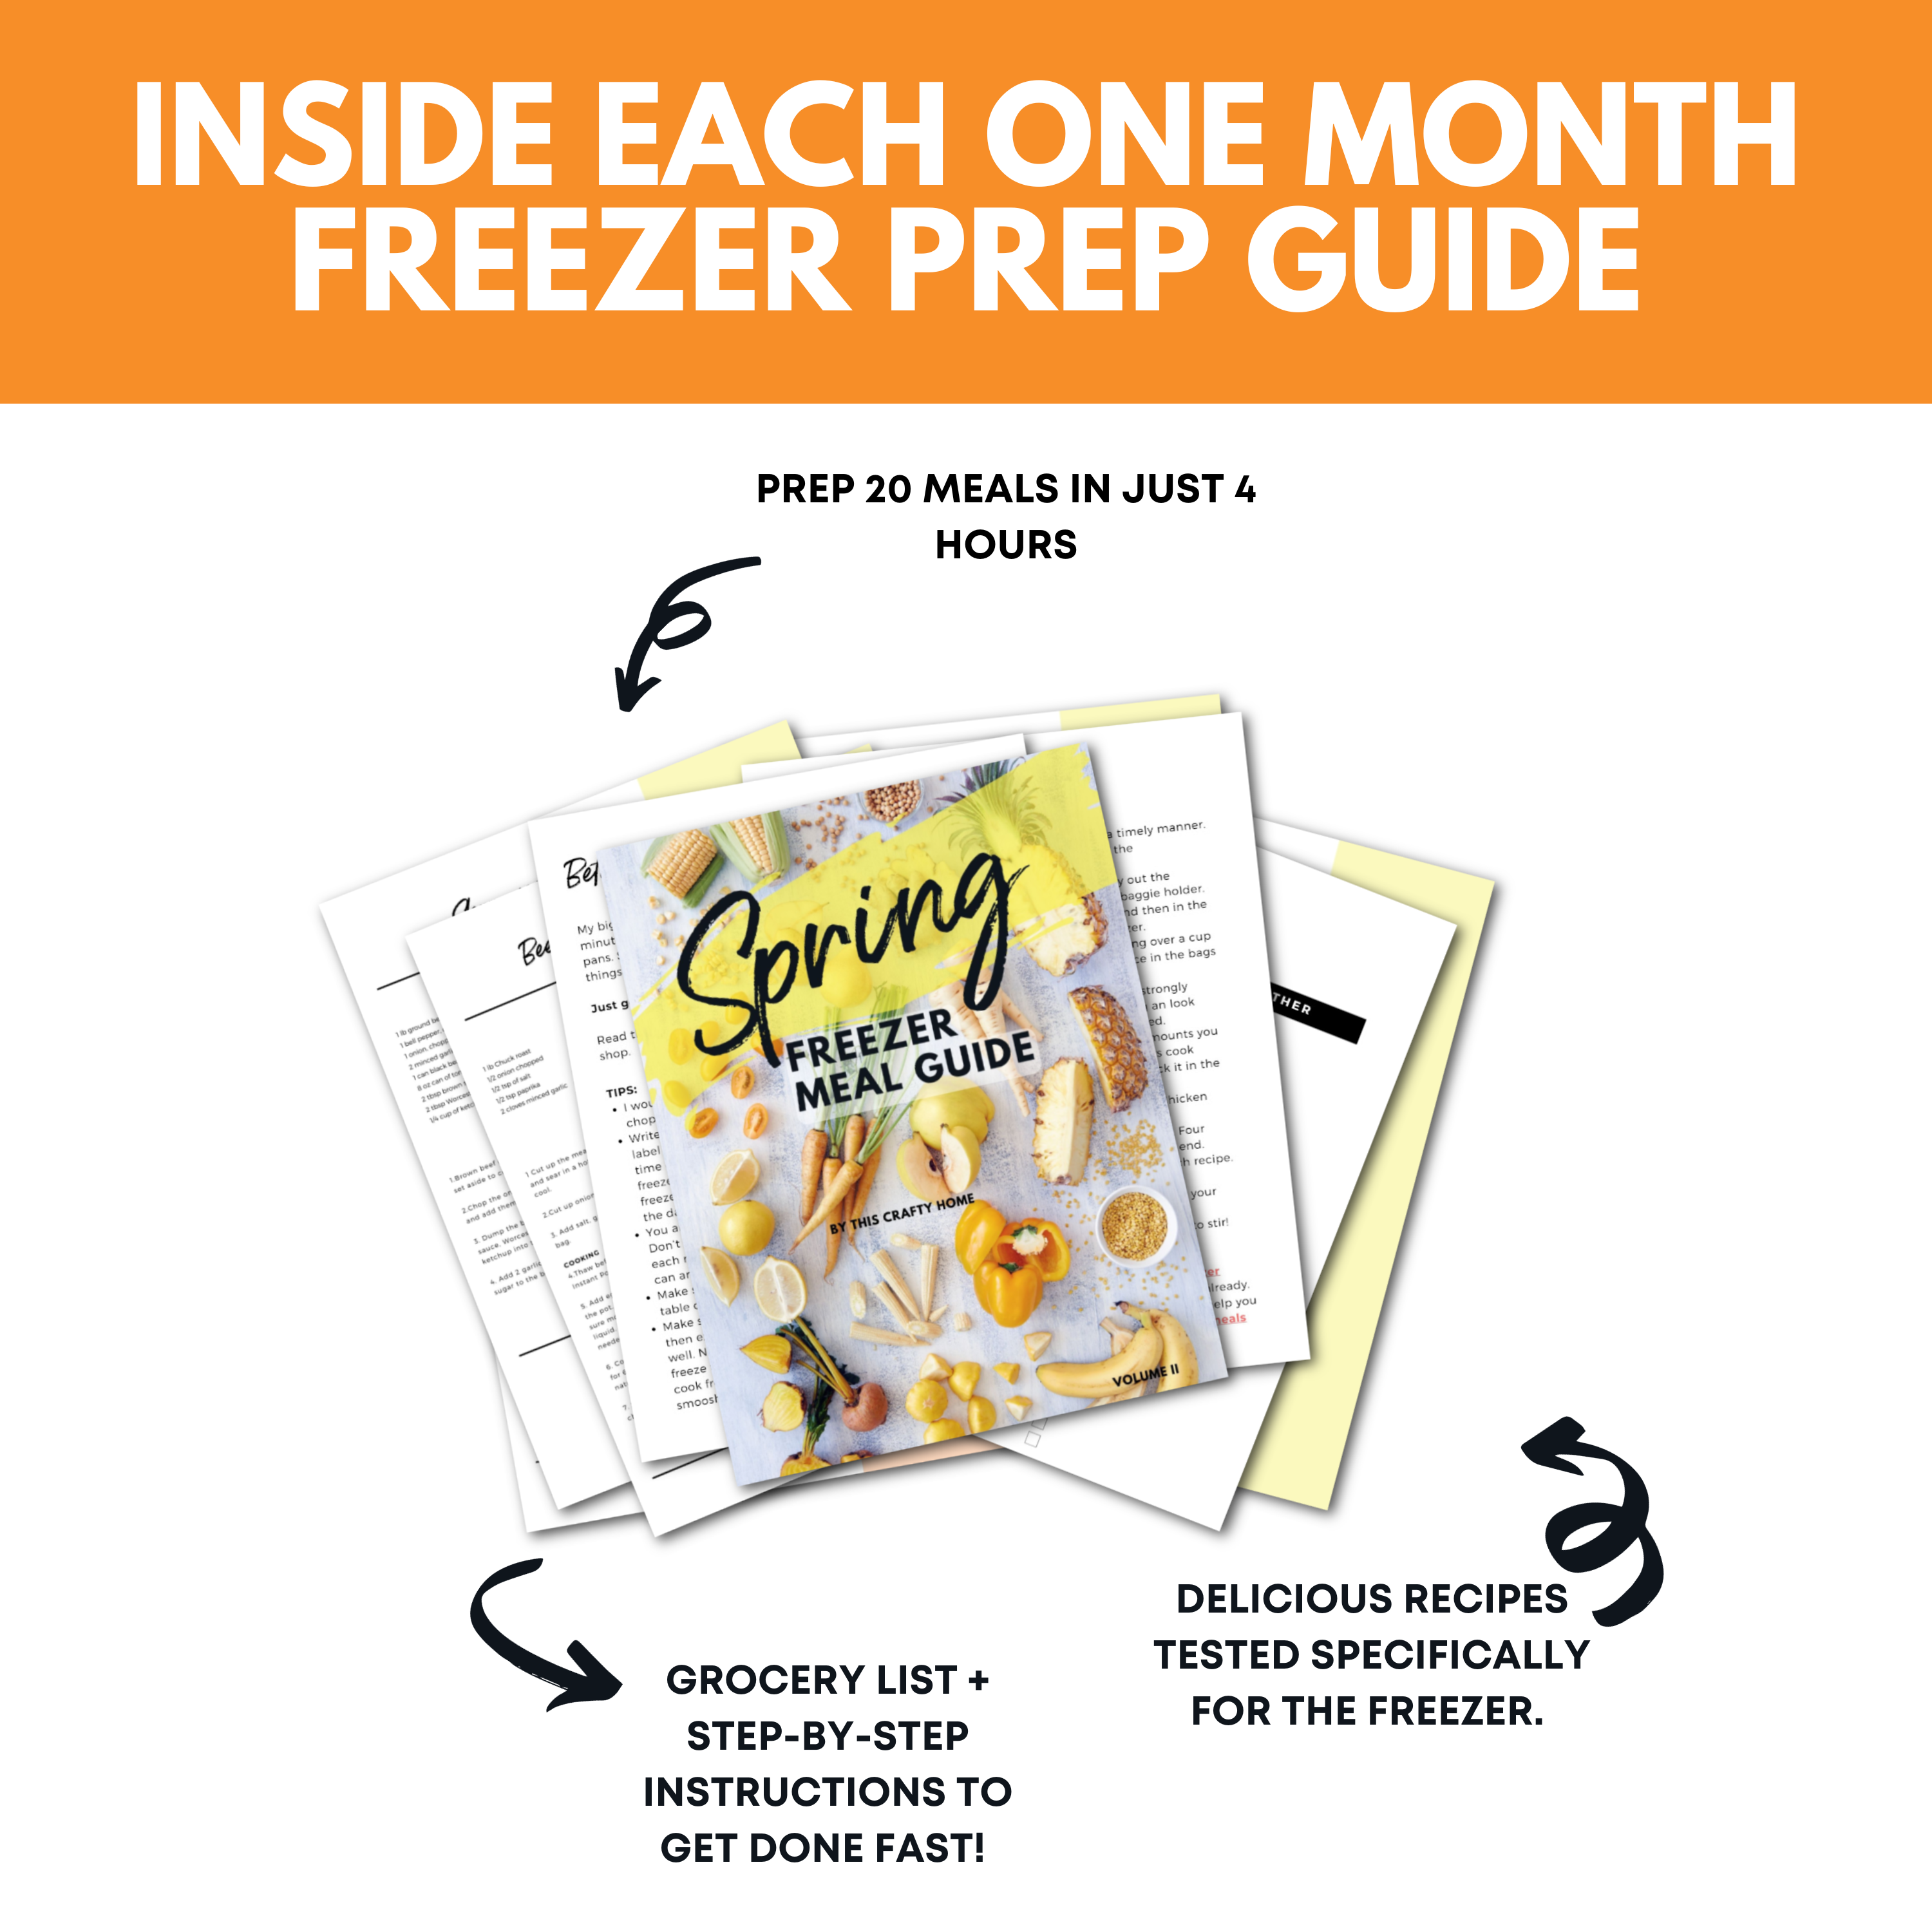 Spring Freezer Meal Guide Vol. II